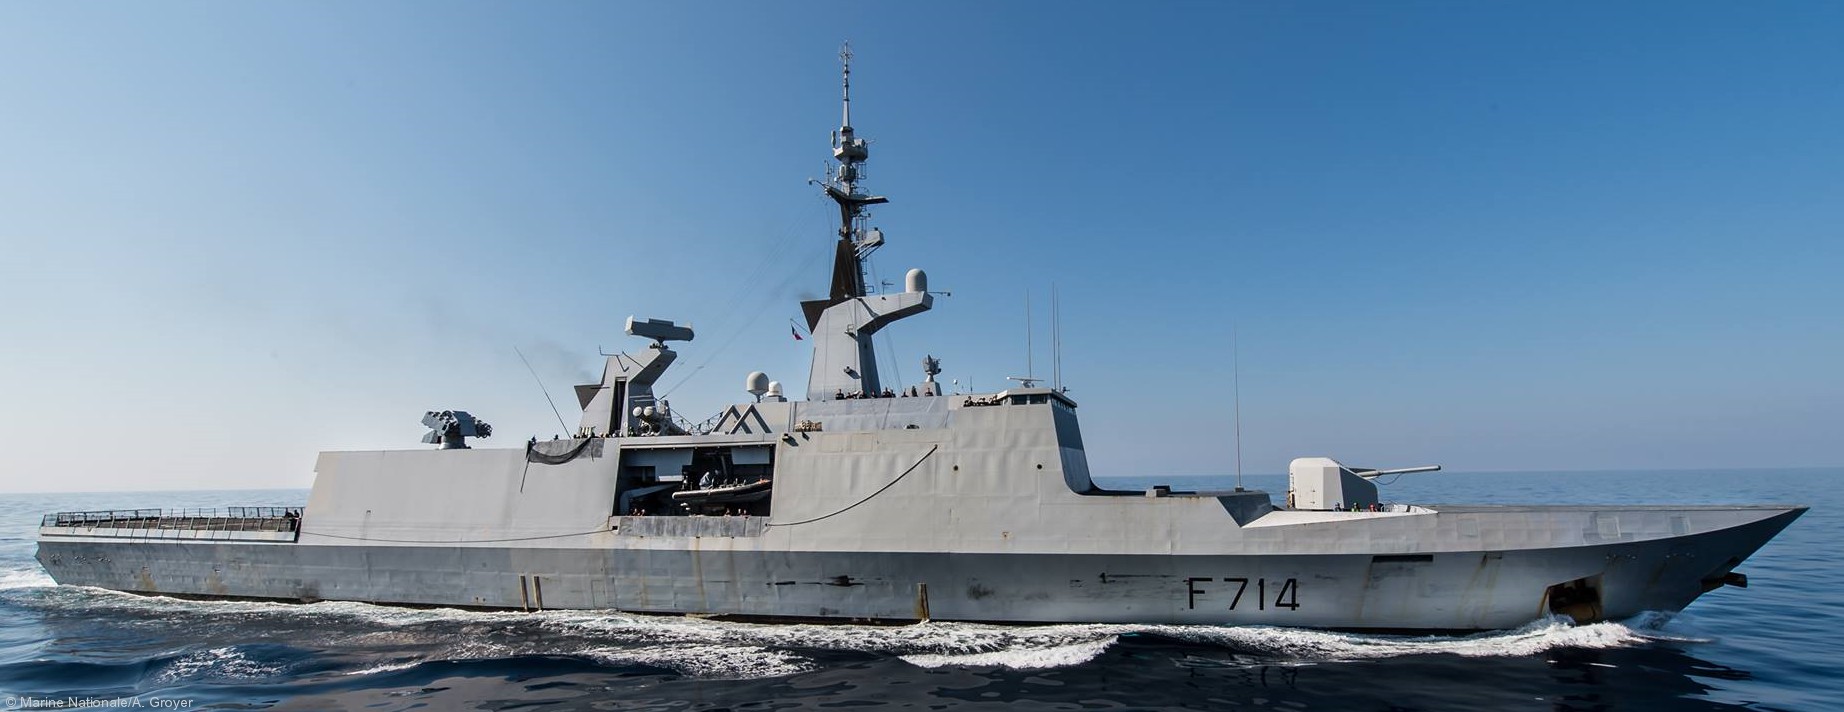 f-714 fs guepratte la fayette class frigate flf french navy marine nationale 02